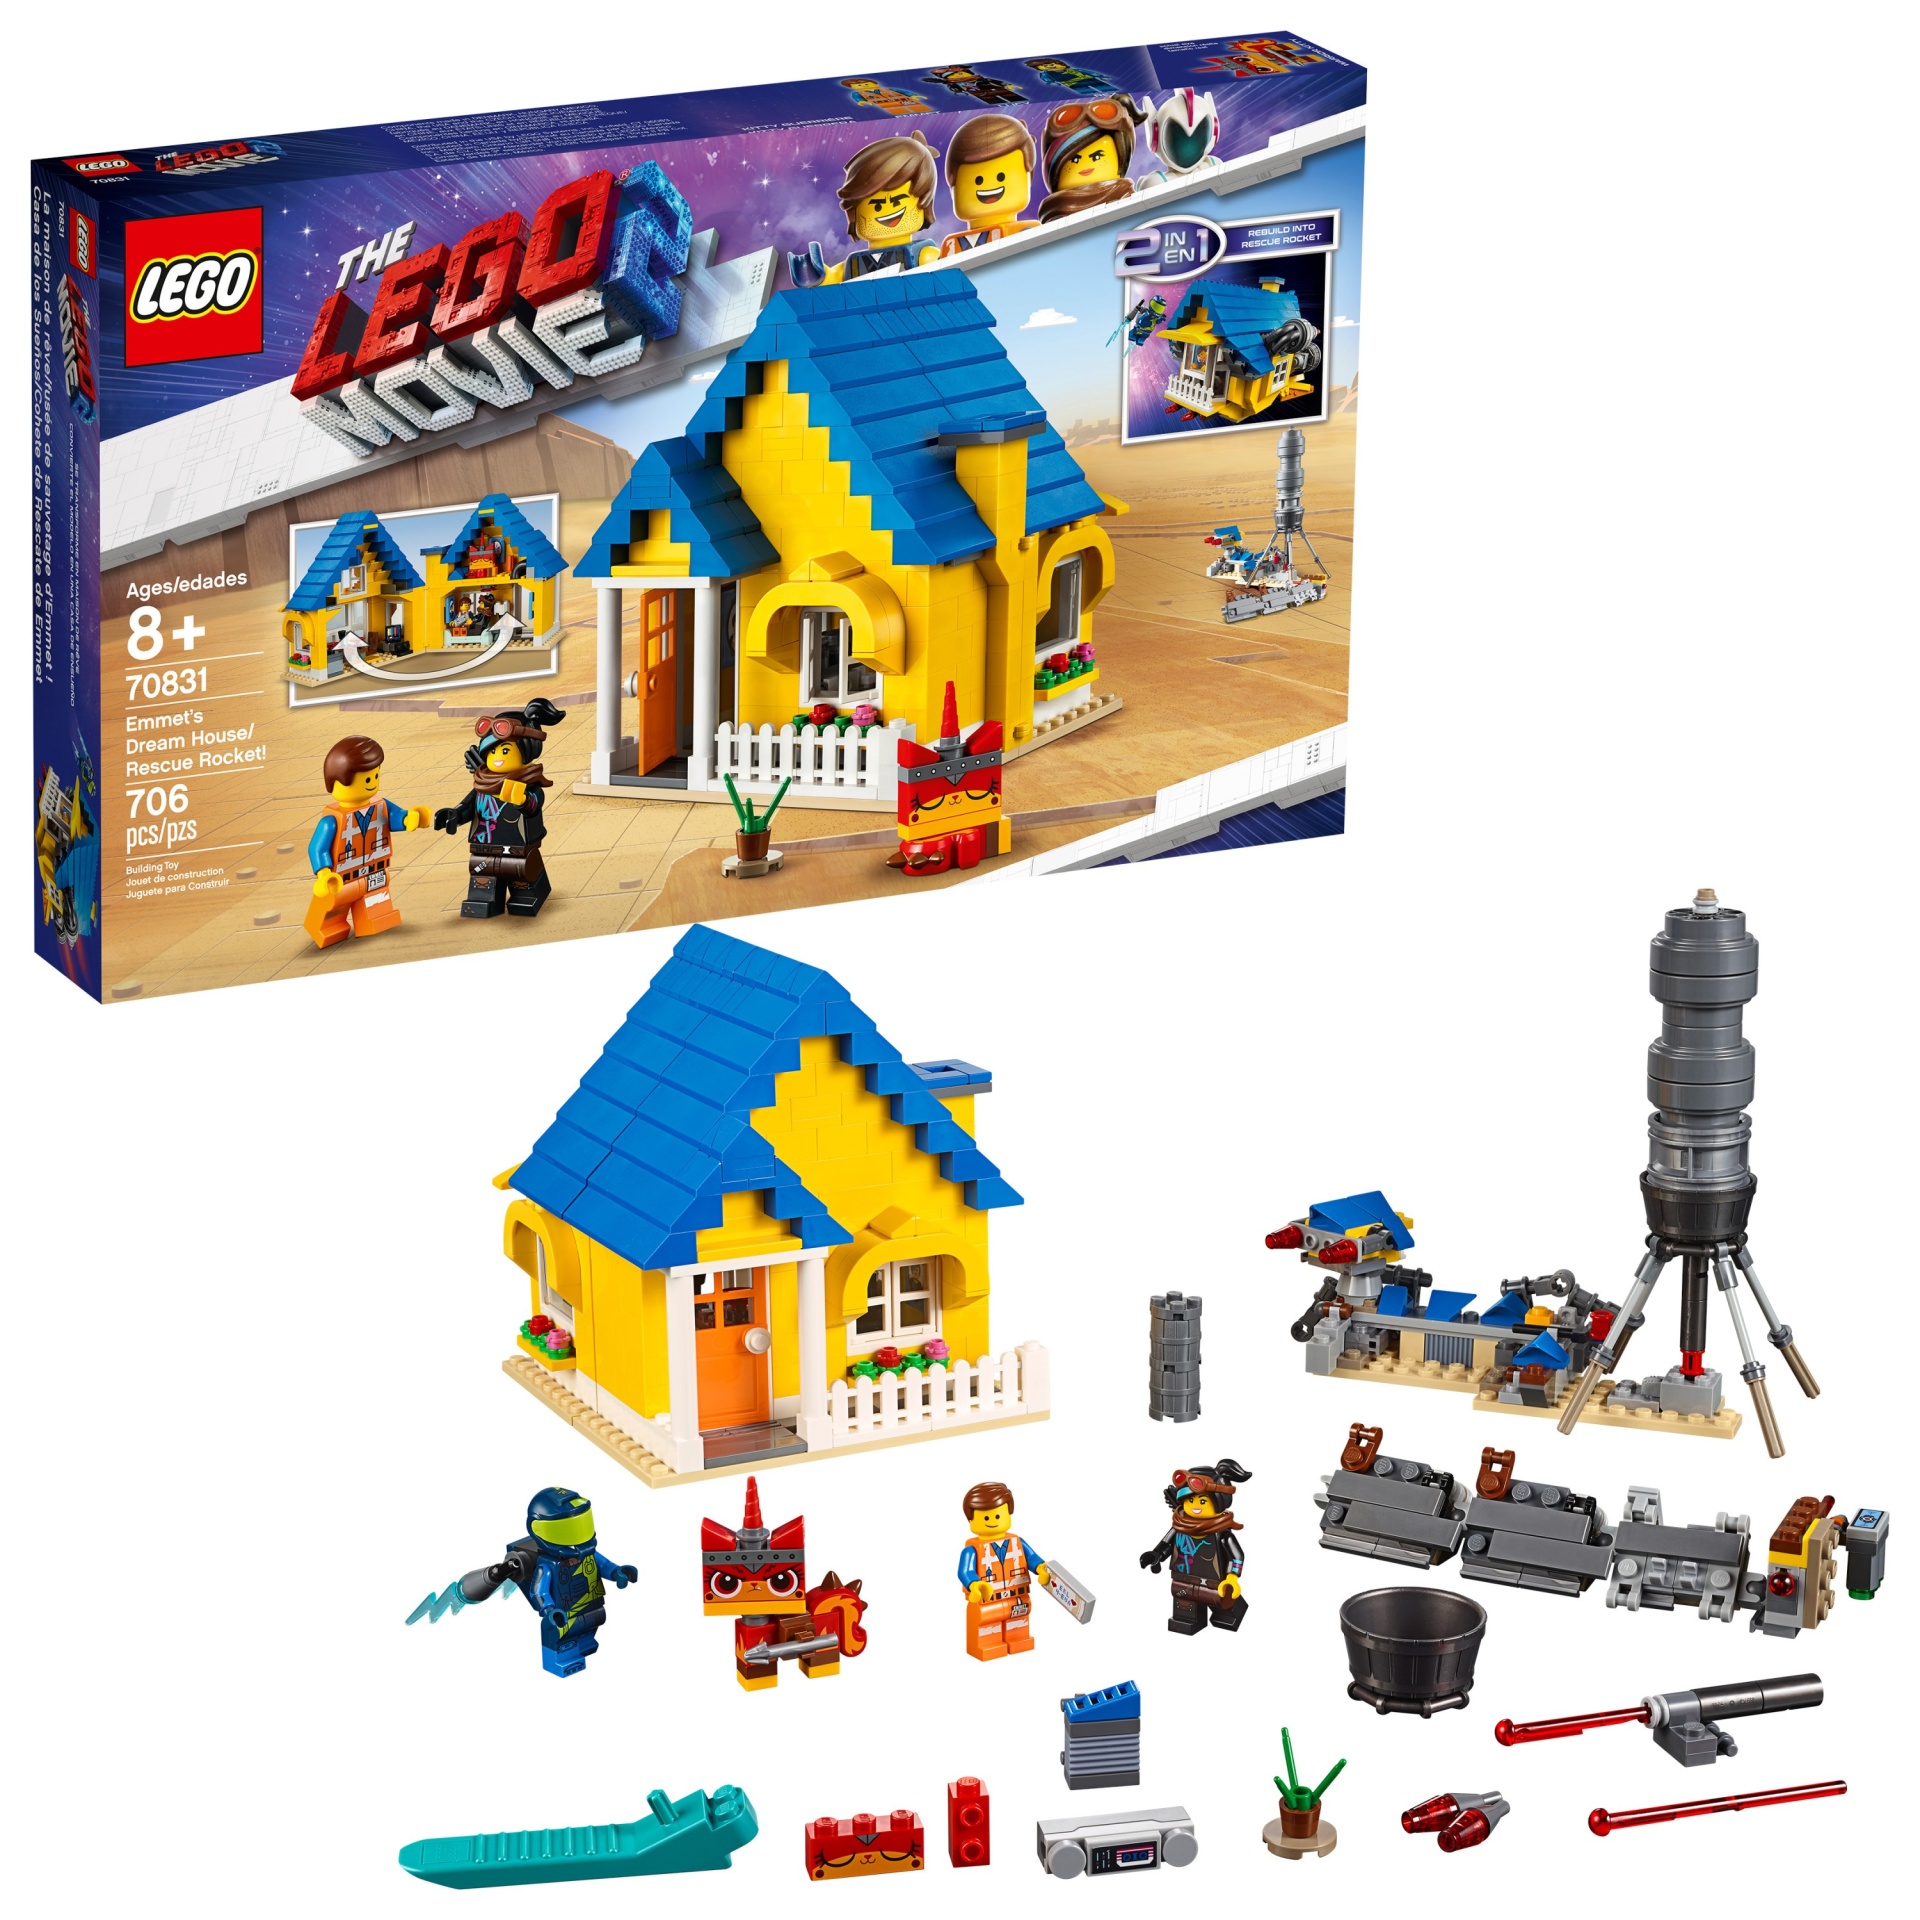 slide 1 of 7, THE LEGO MOVIE 2 Emmet's Dream House/Rescue Rocket! 70831, 706 ct